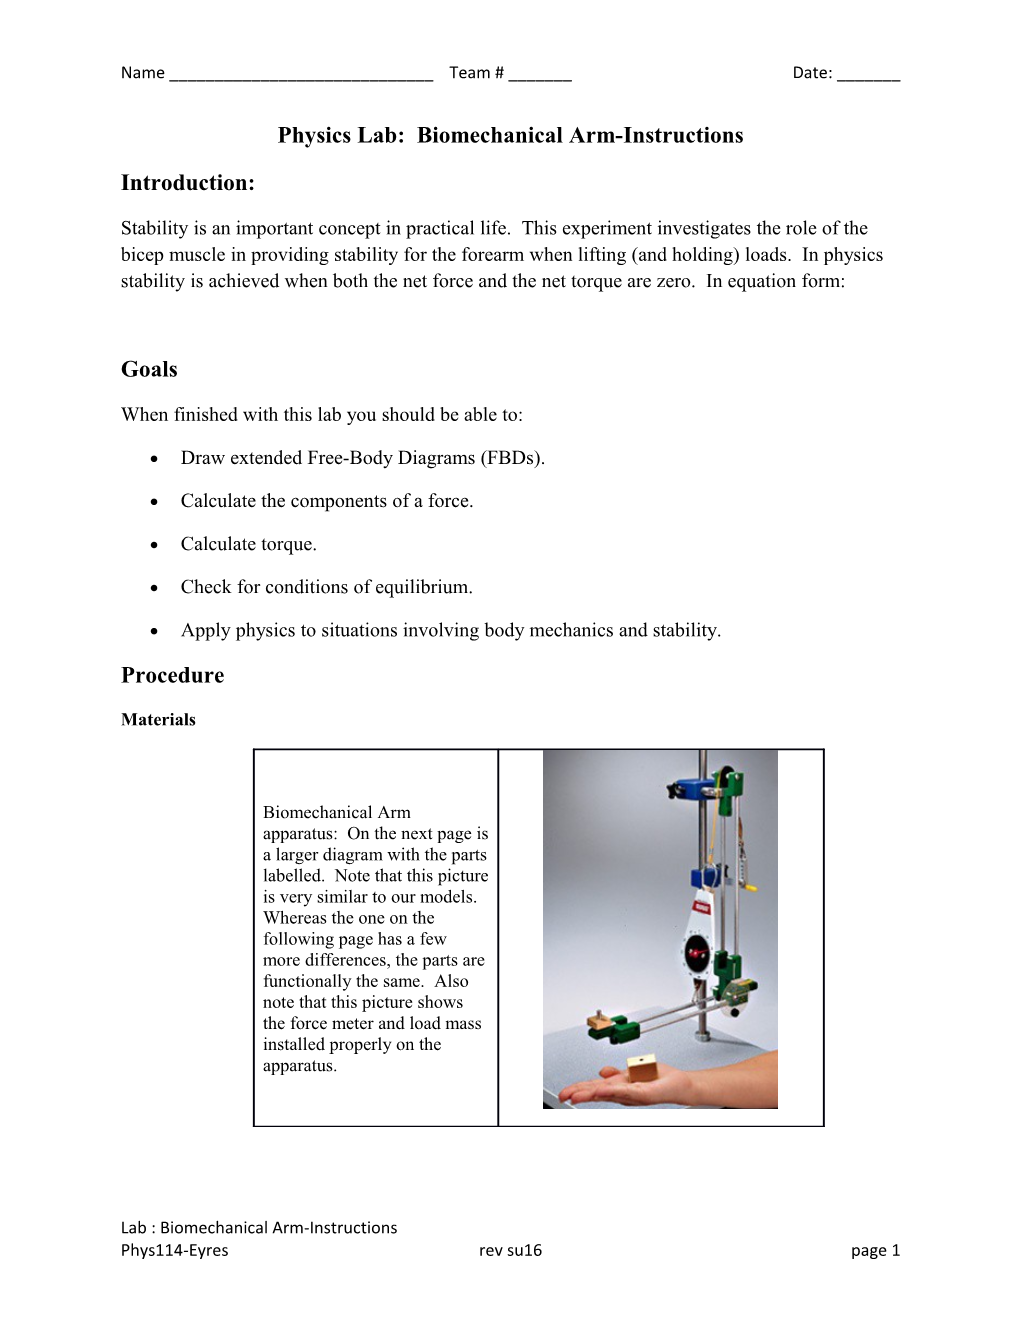 Physics Lab: Biomechanical Arm-Instructions